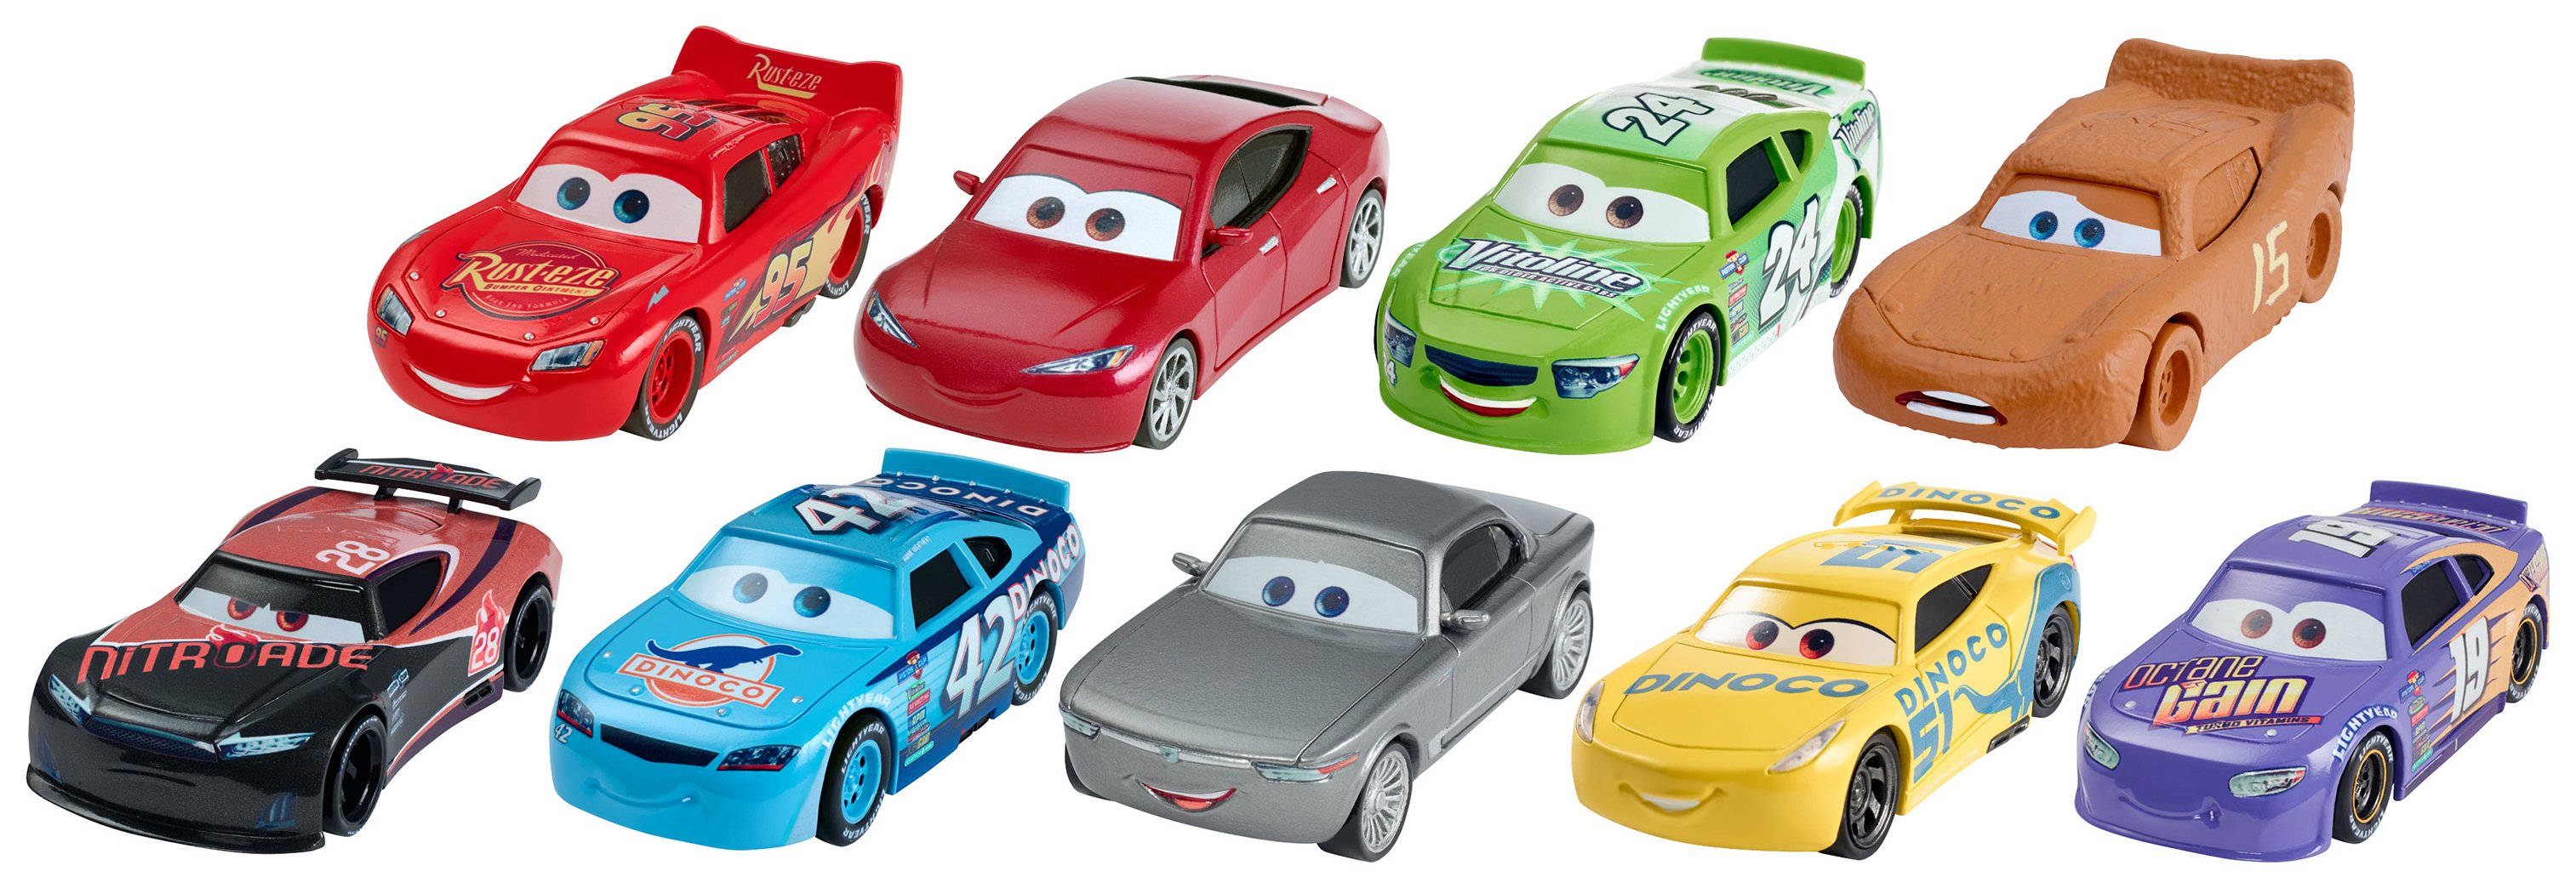 cars 3 toys argos